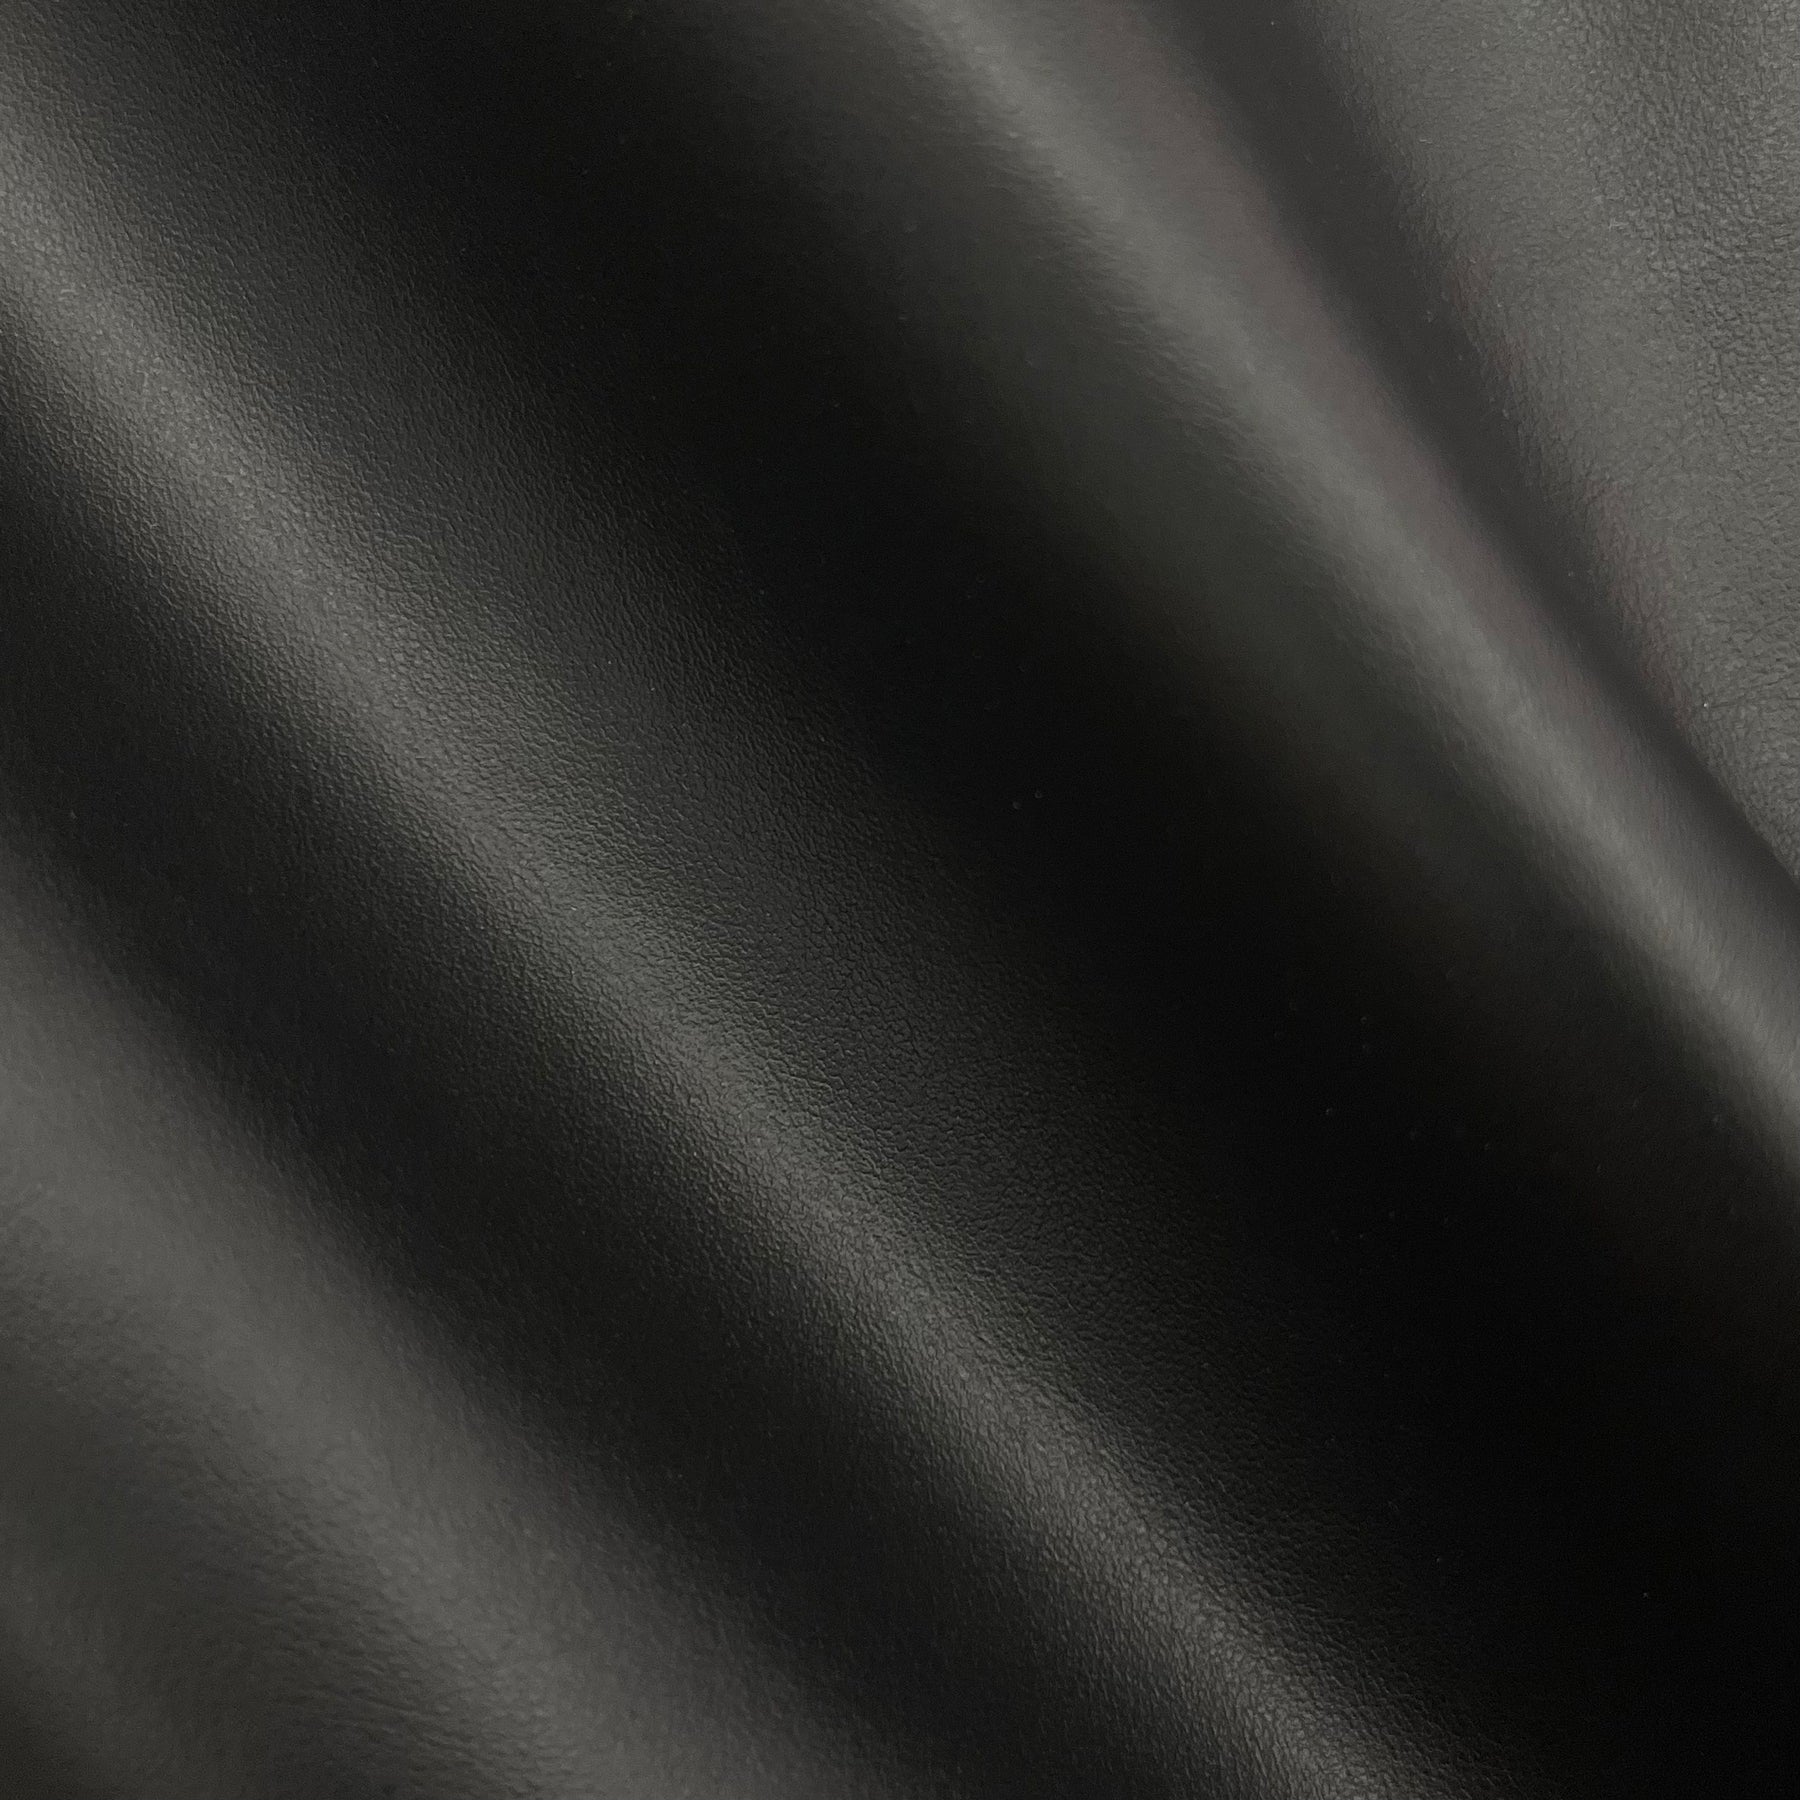 Magnificat Fine semi-leather cover (Regular)